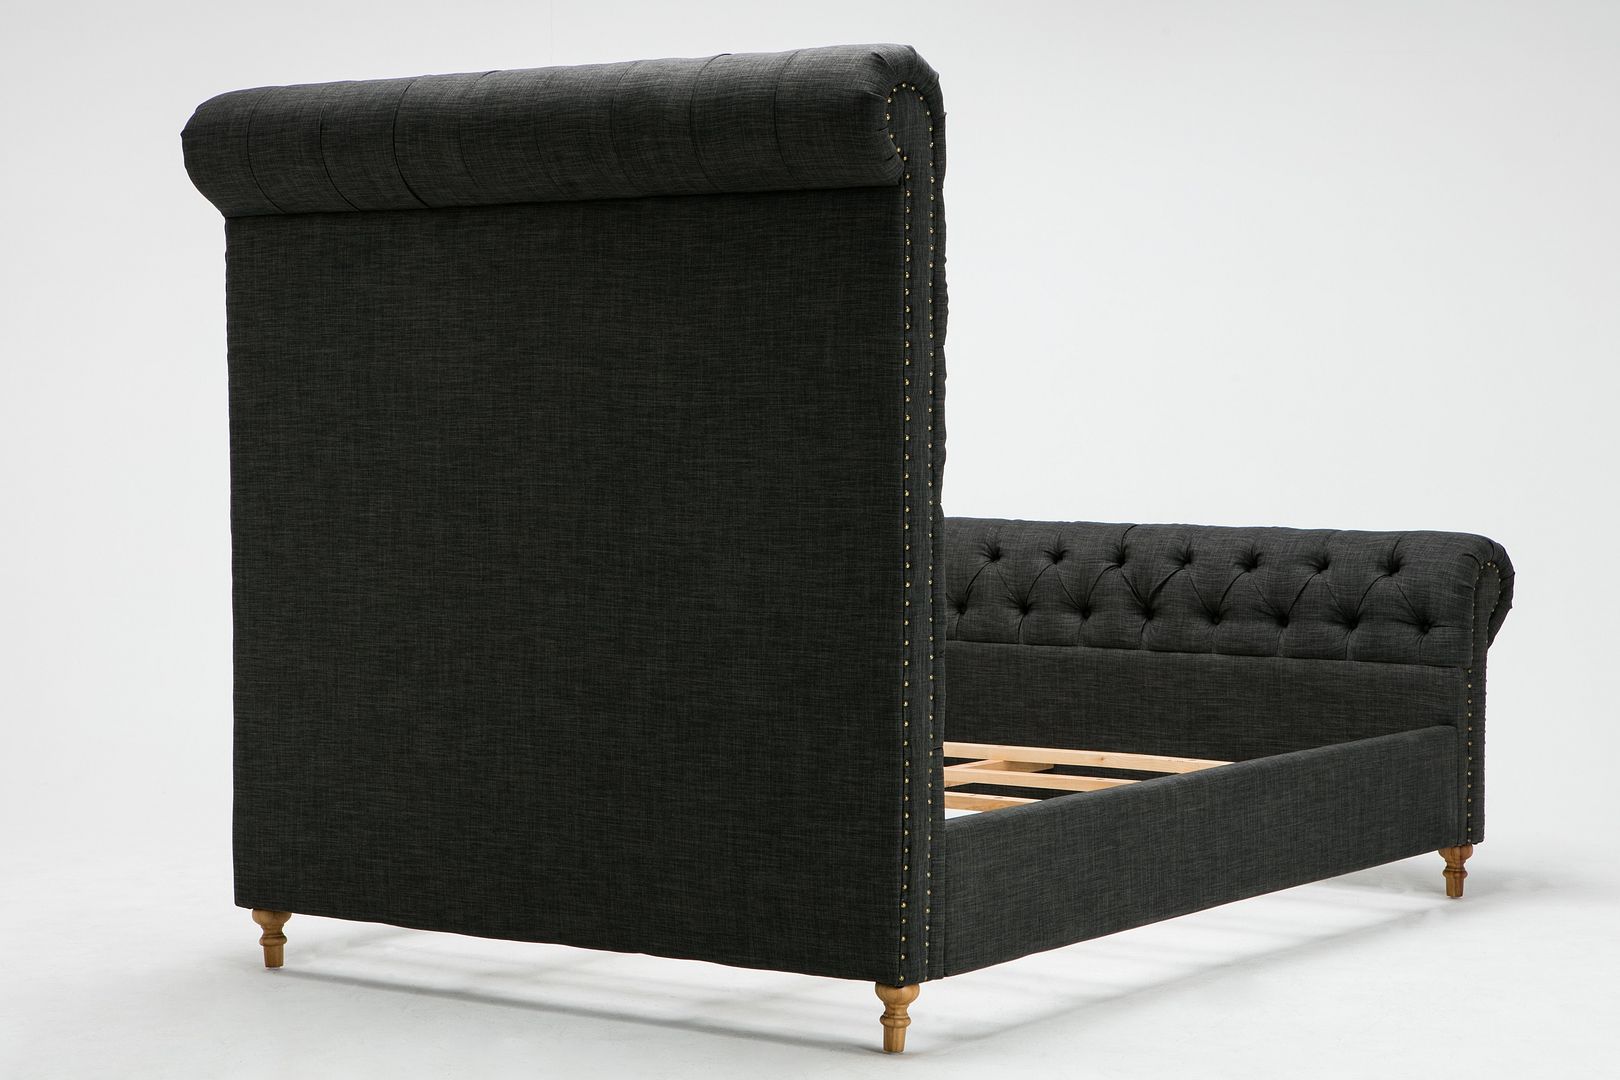 Empire Fabric Upholstered Platform Bed Frame - East Shore Modern Home Furnishings